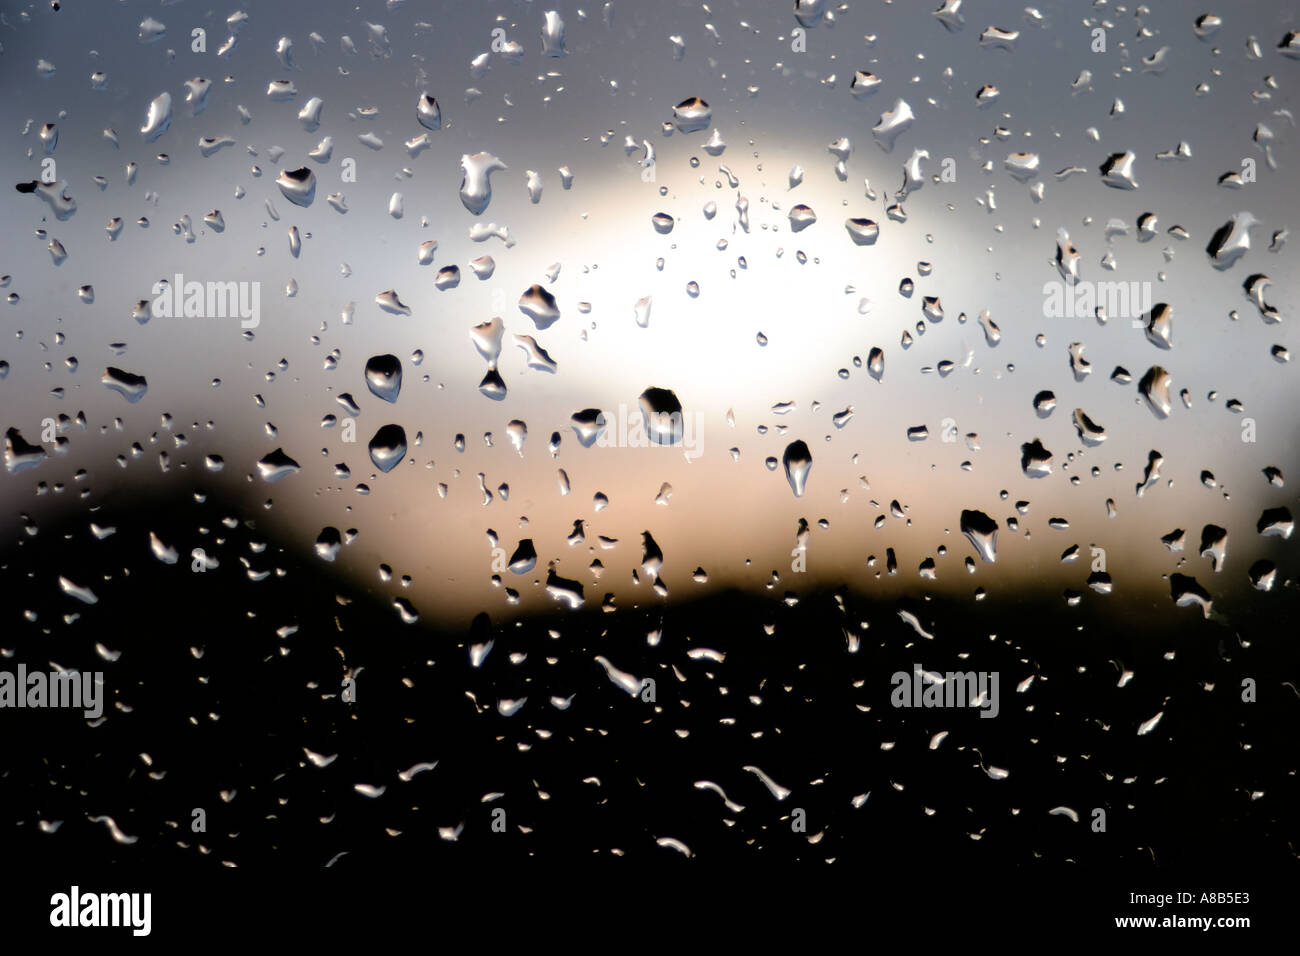 RAIN DROPS ON WINDOW PANE AS SUN SETS Stock Photo